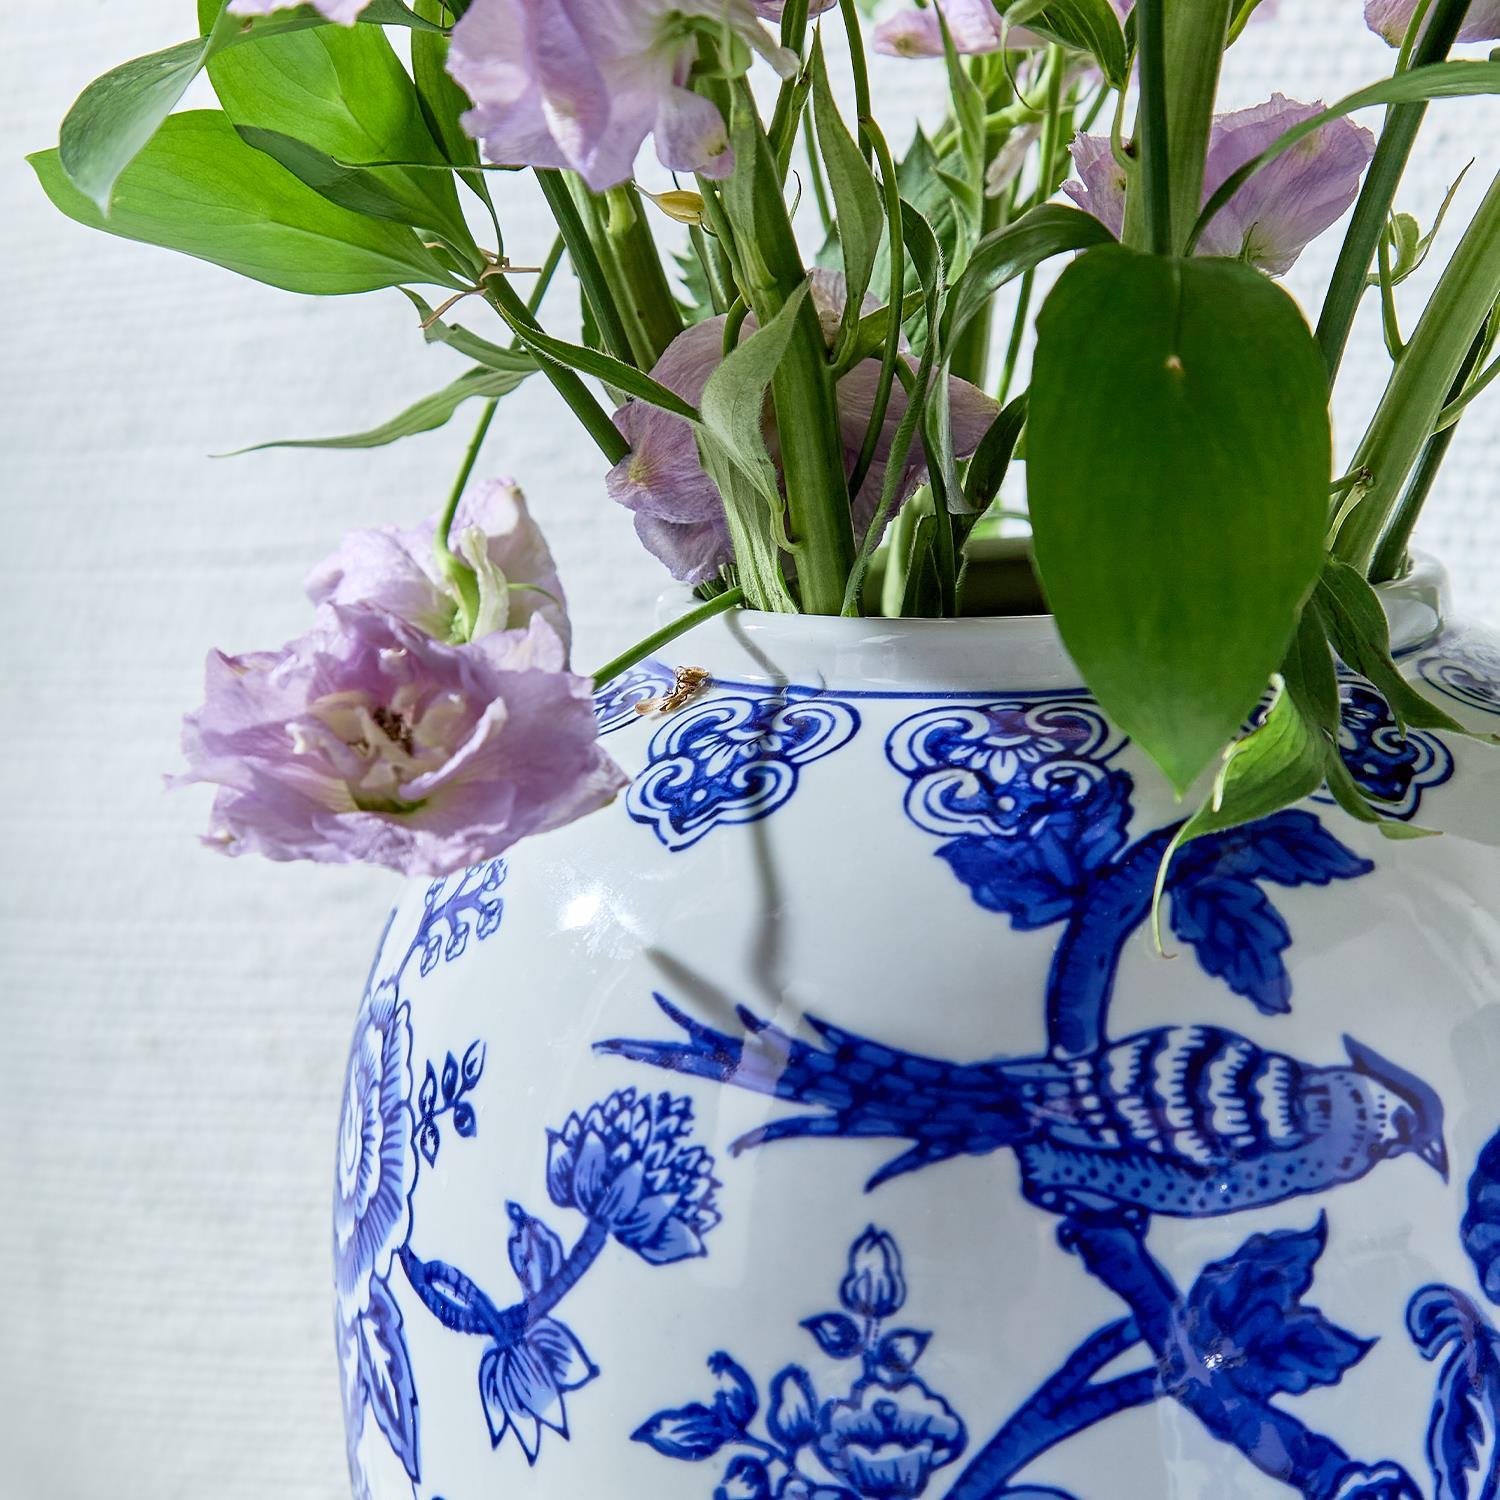 10" Blue and White Vase